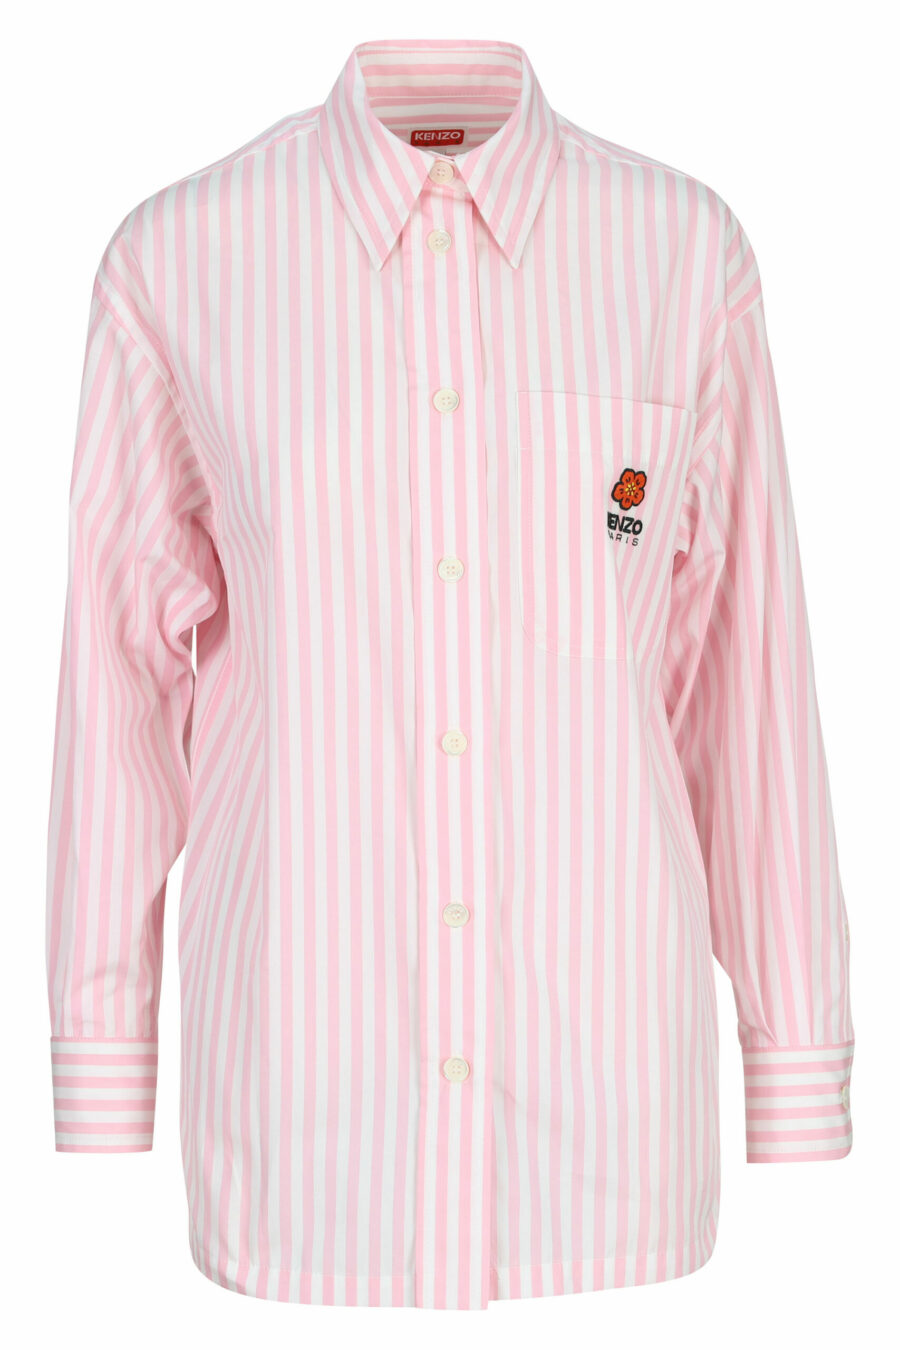 Camisa rosa "oversize" con minilogo "boke flower" - 3612230589674 scaled